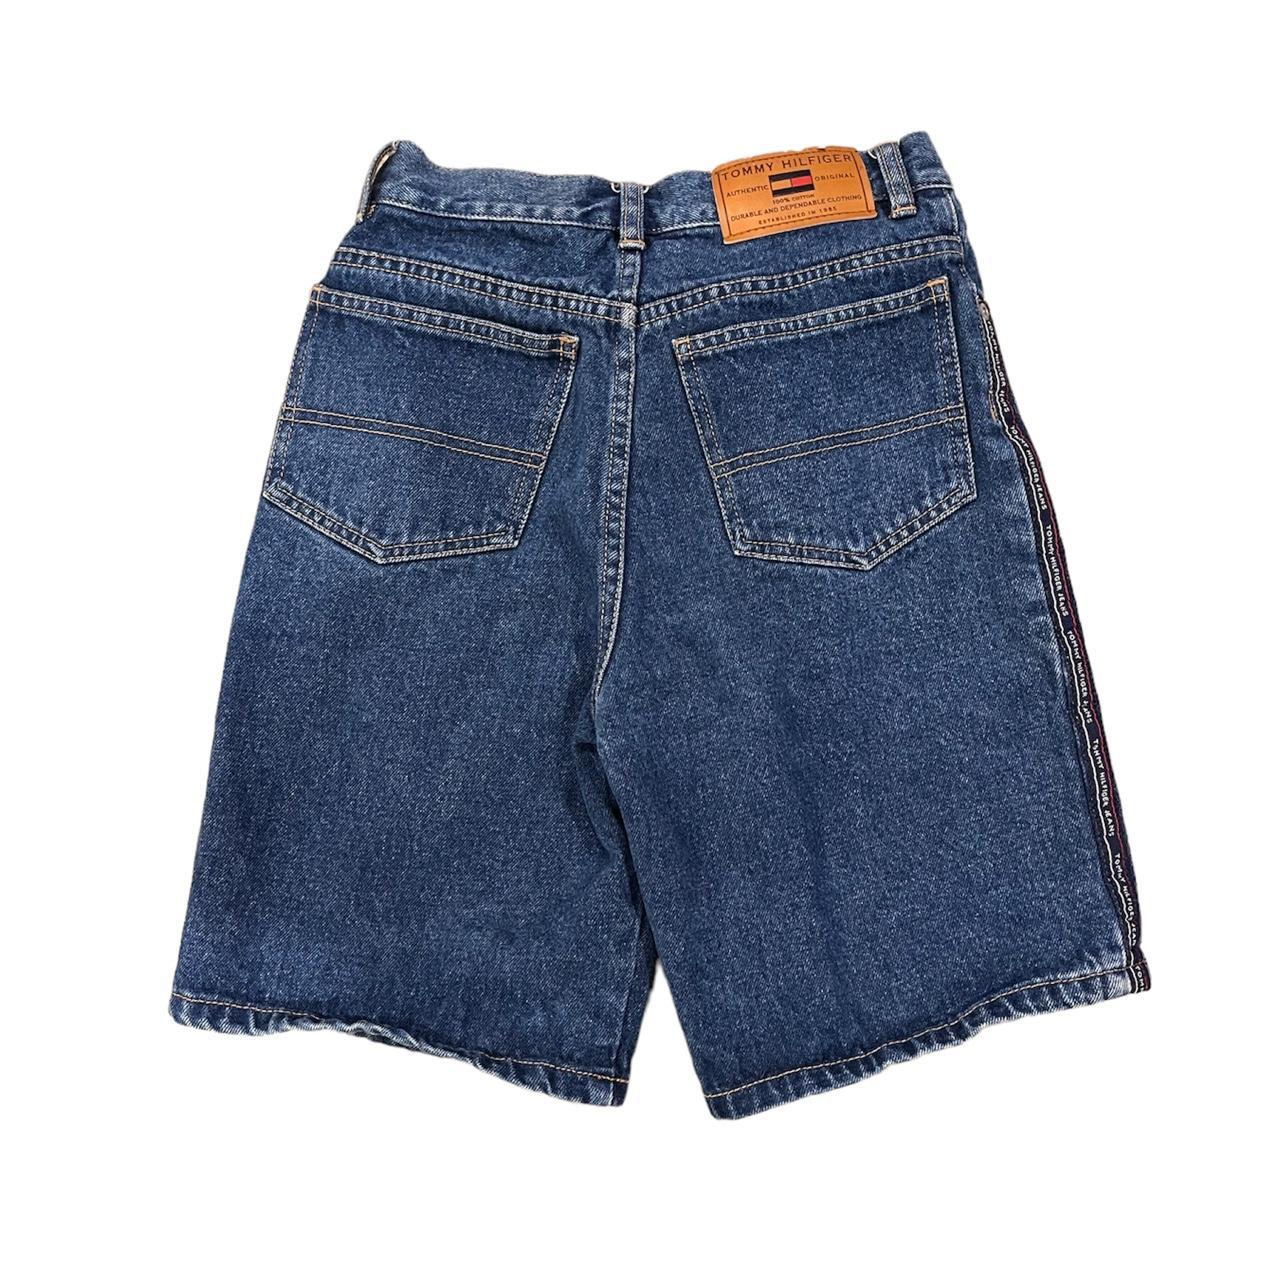 Vintage Tommy Hilfiger dark wash denim shorts/jorts.... - Depop